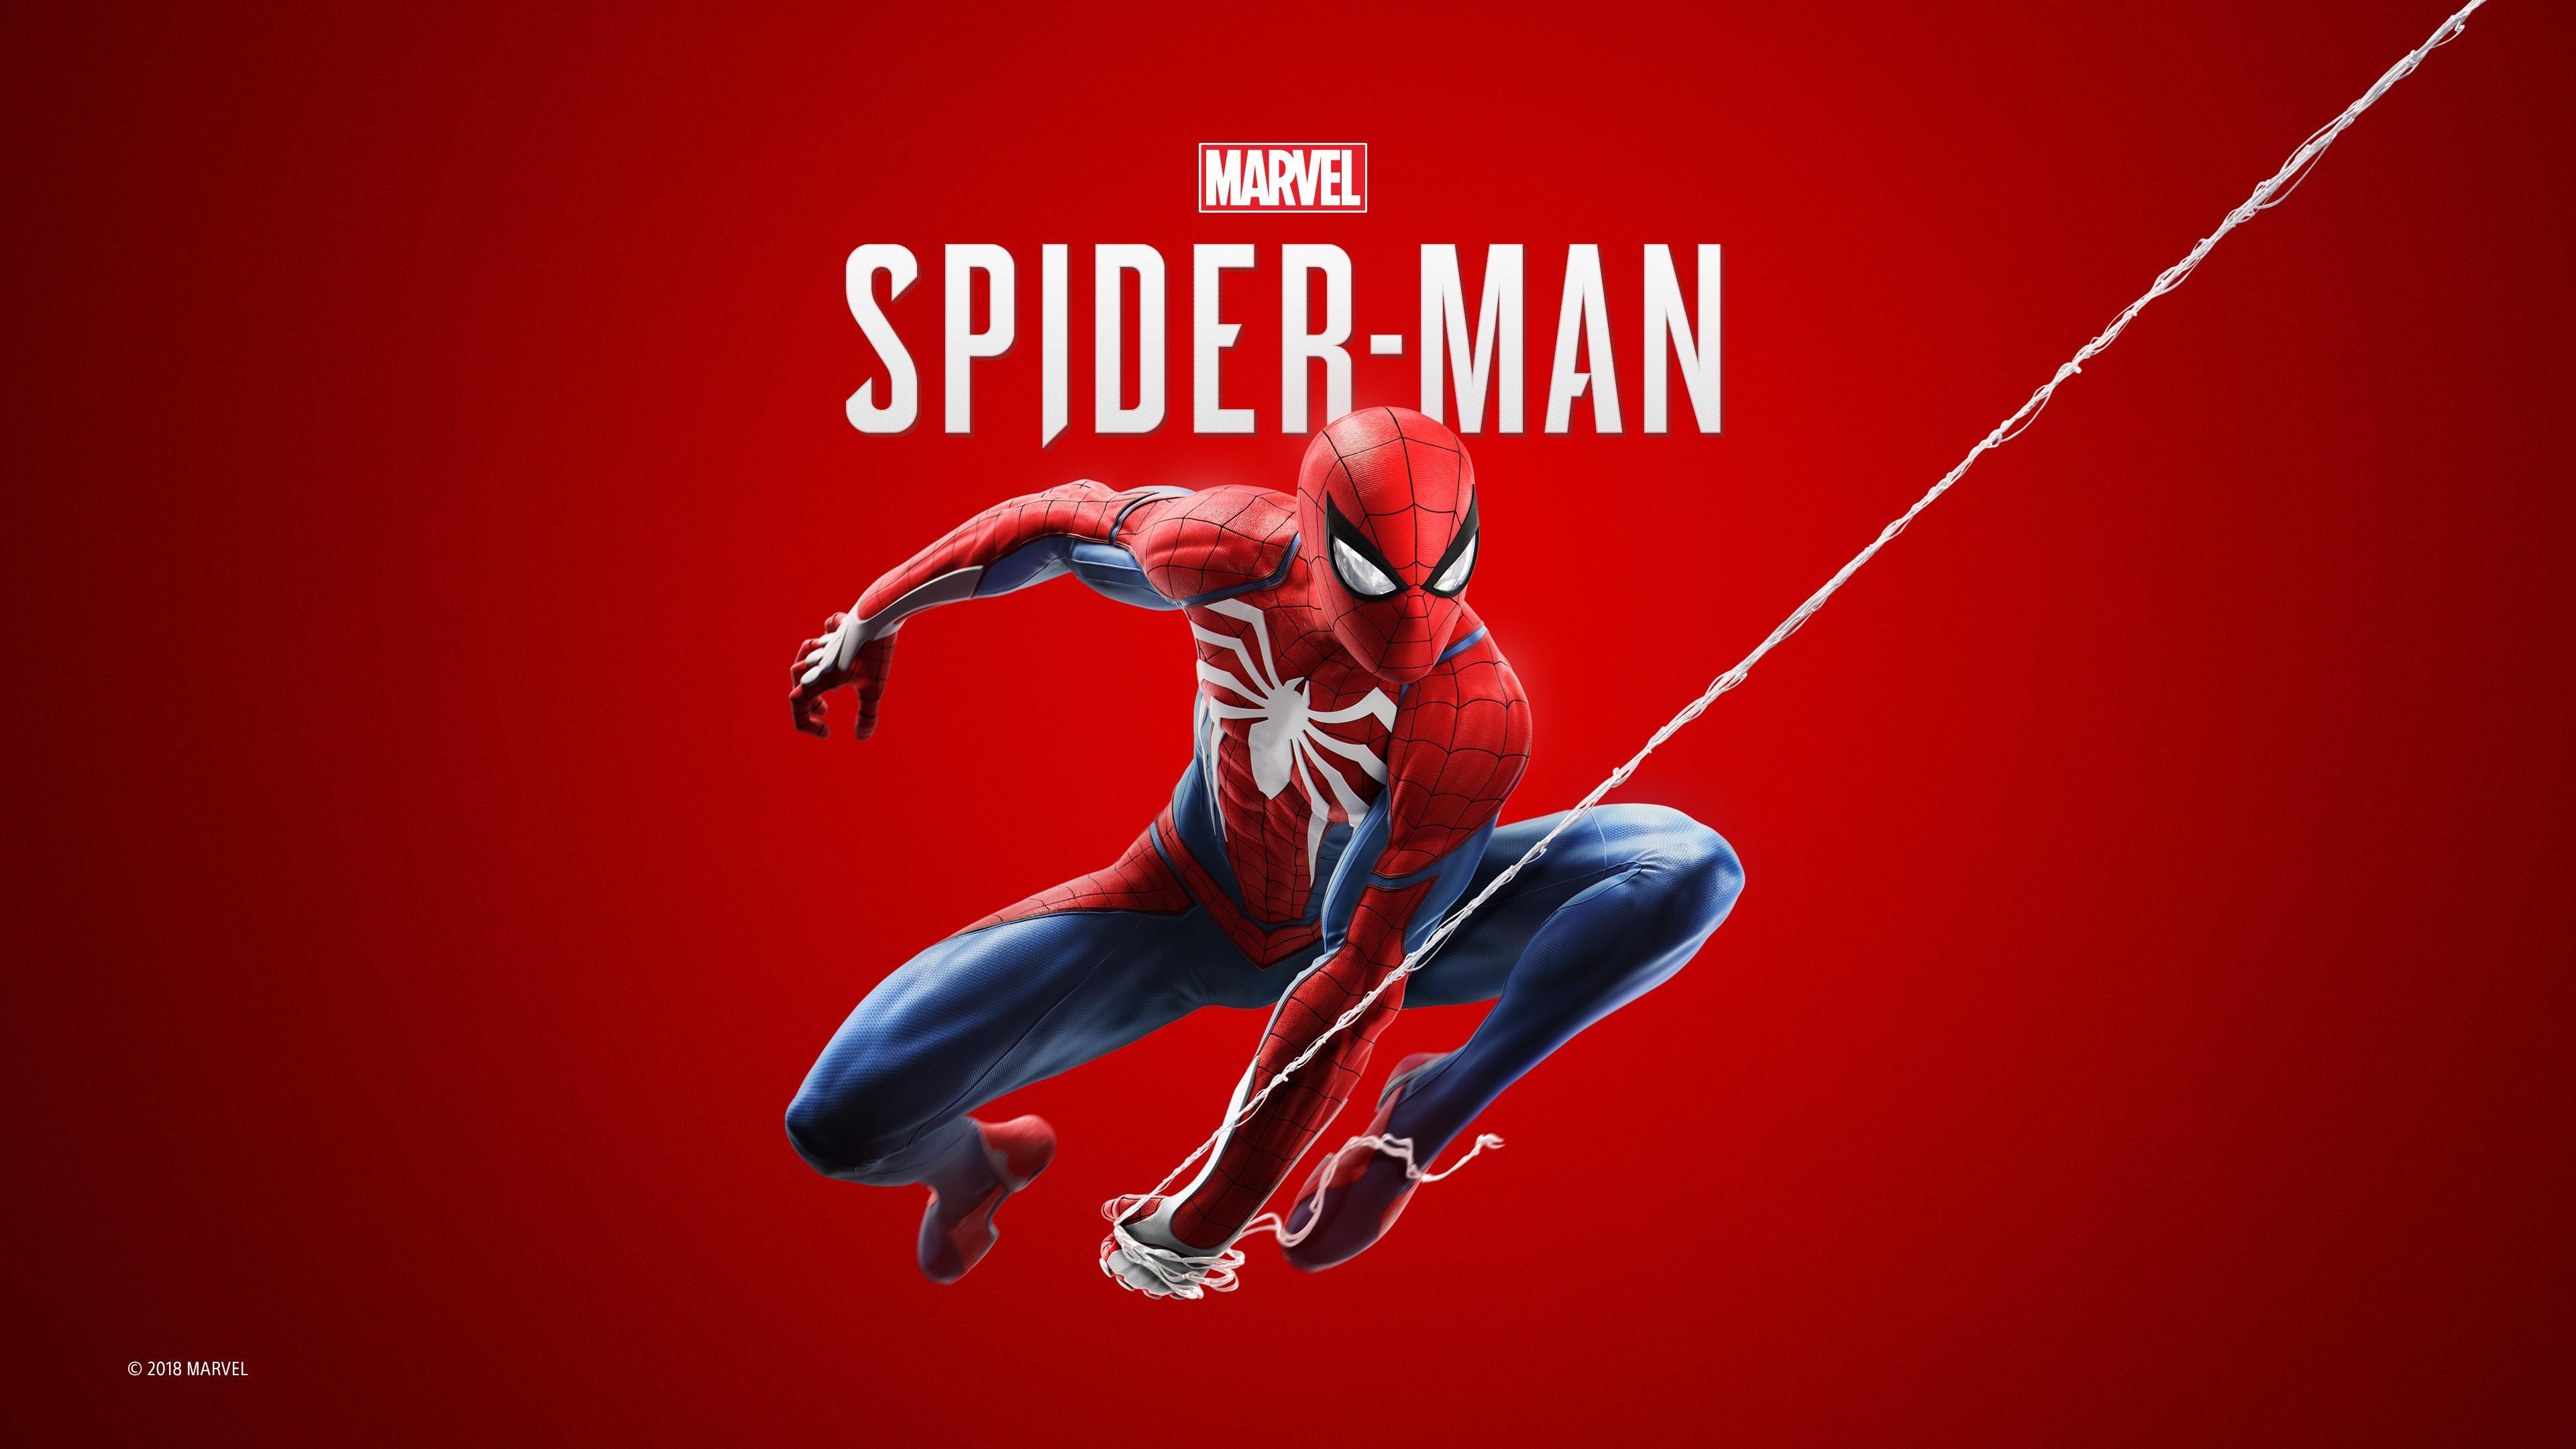 Spiderman 2018 Game 4k, HD Games, 4k Wallpaper, Image, Background